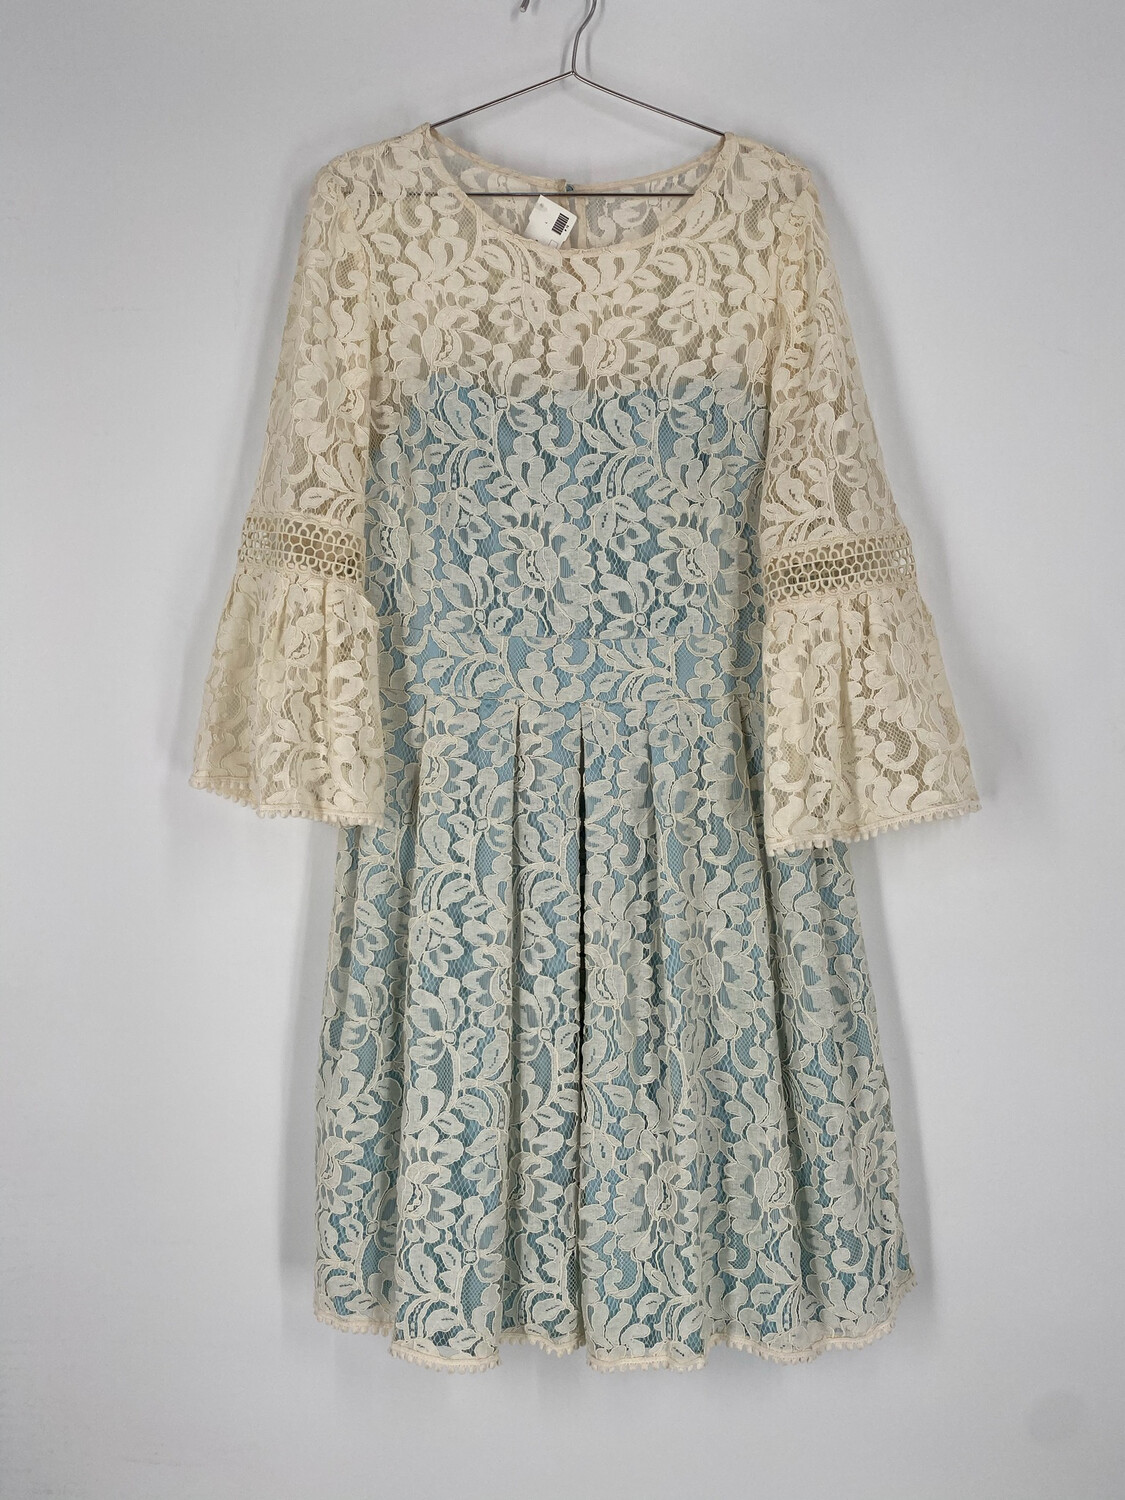 Eliza J. Vintage Lace Dress Size 1X